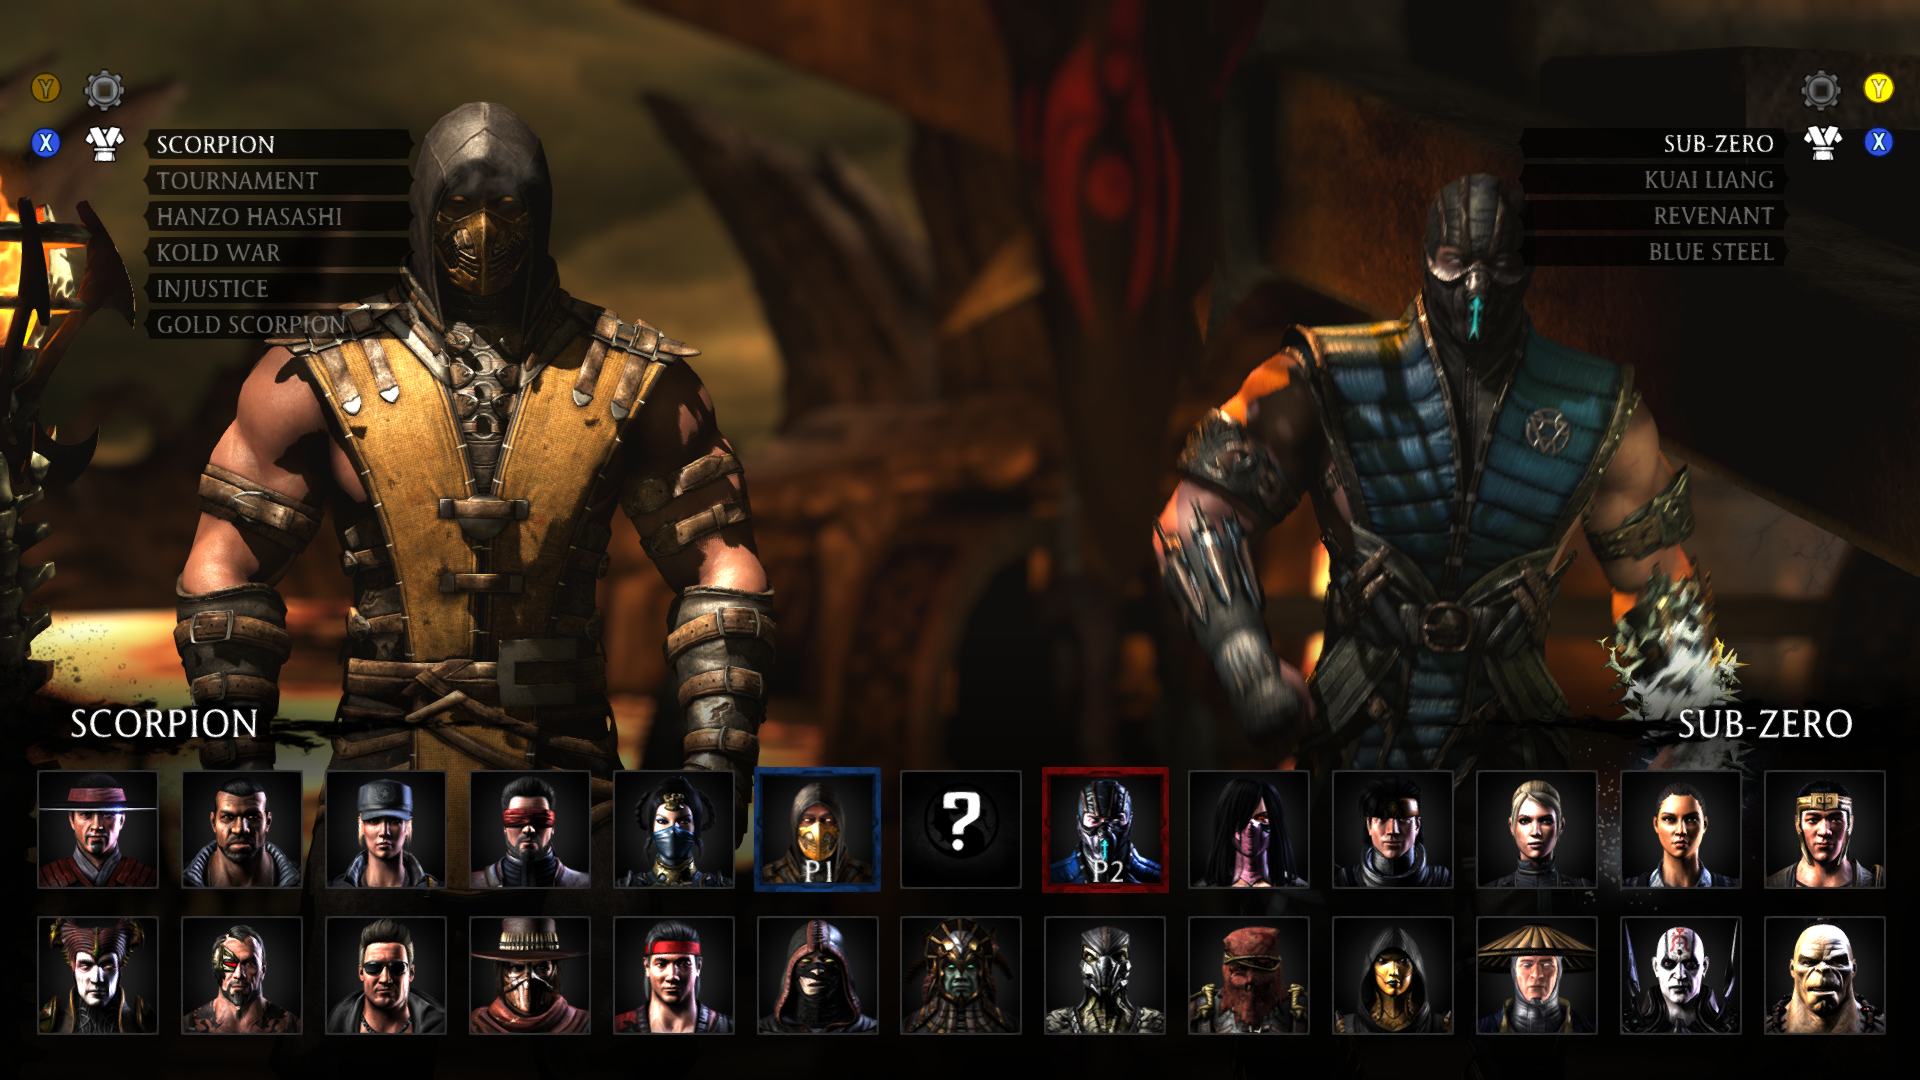 Mortal kombat xl krypt skins